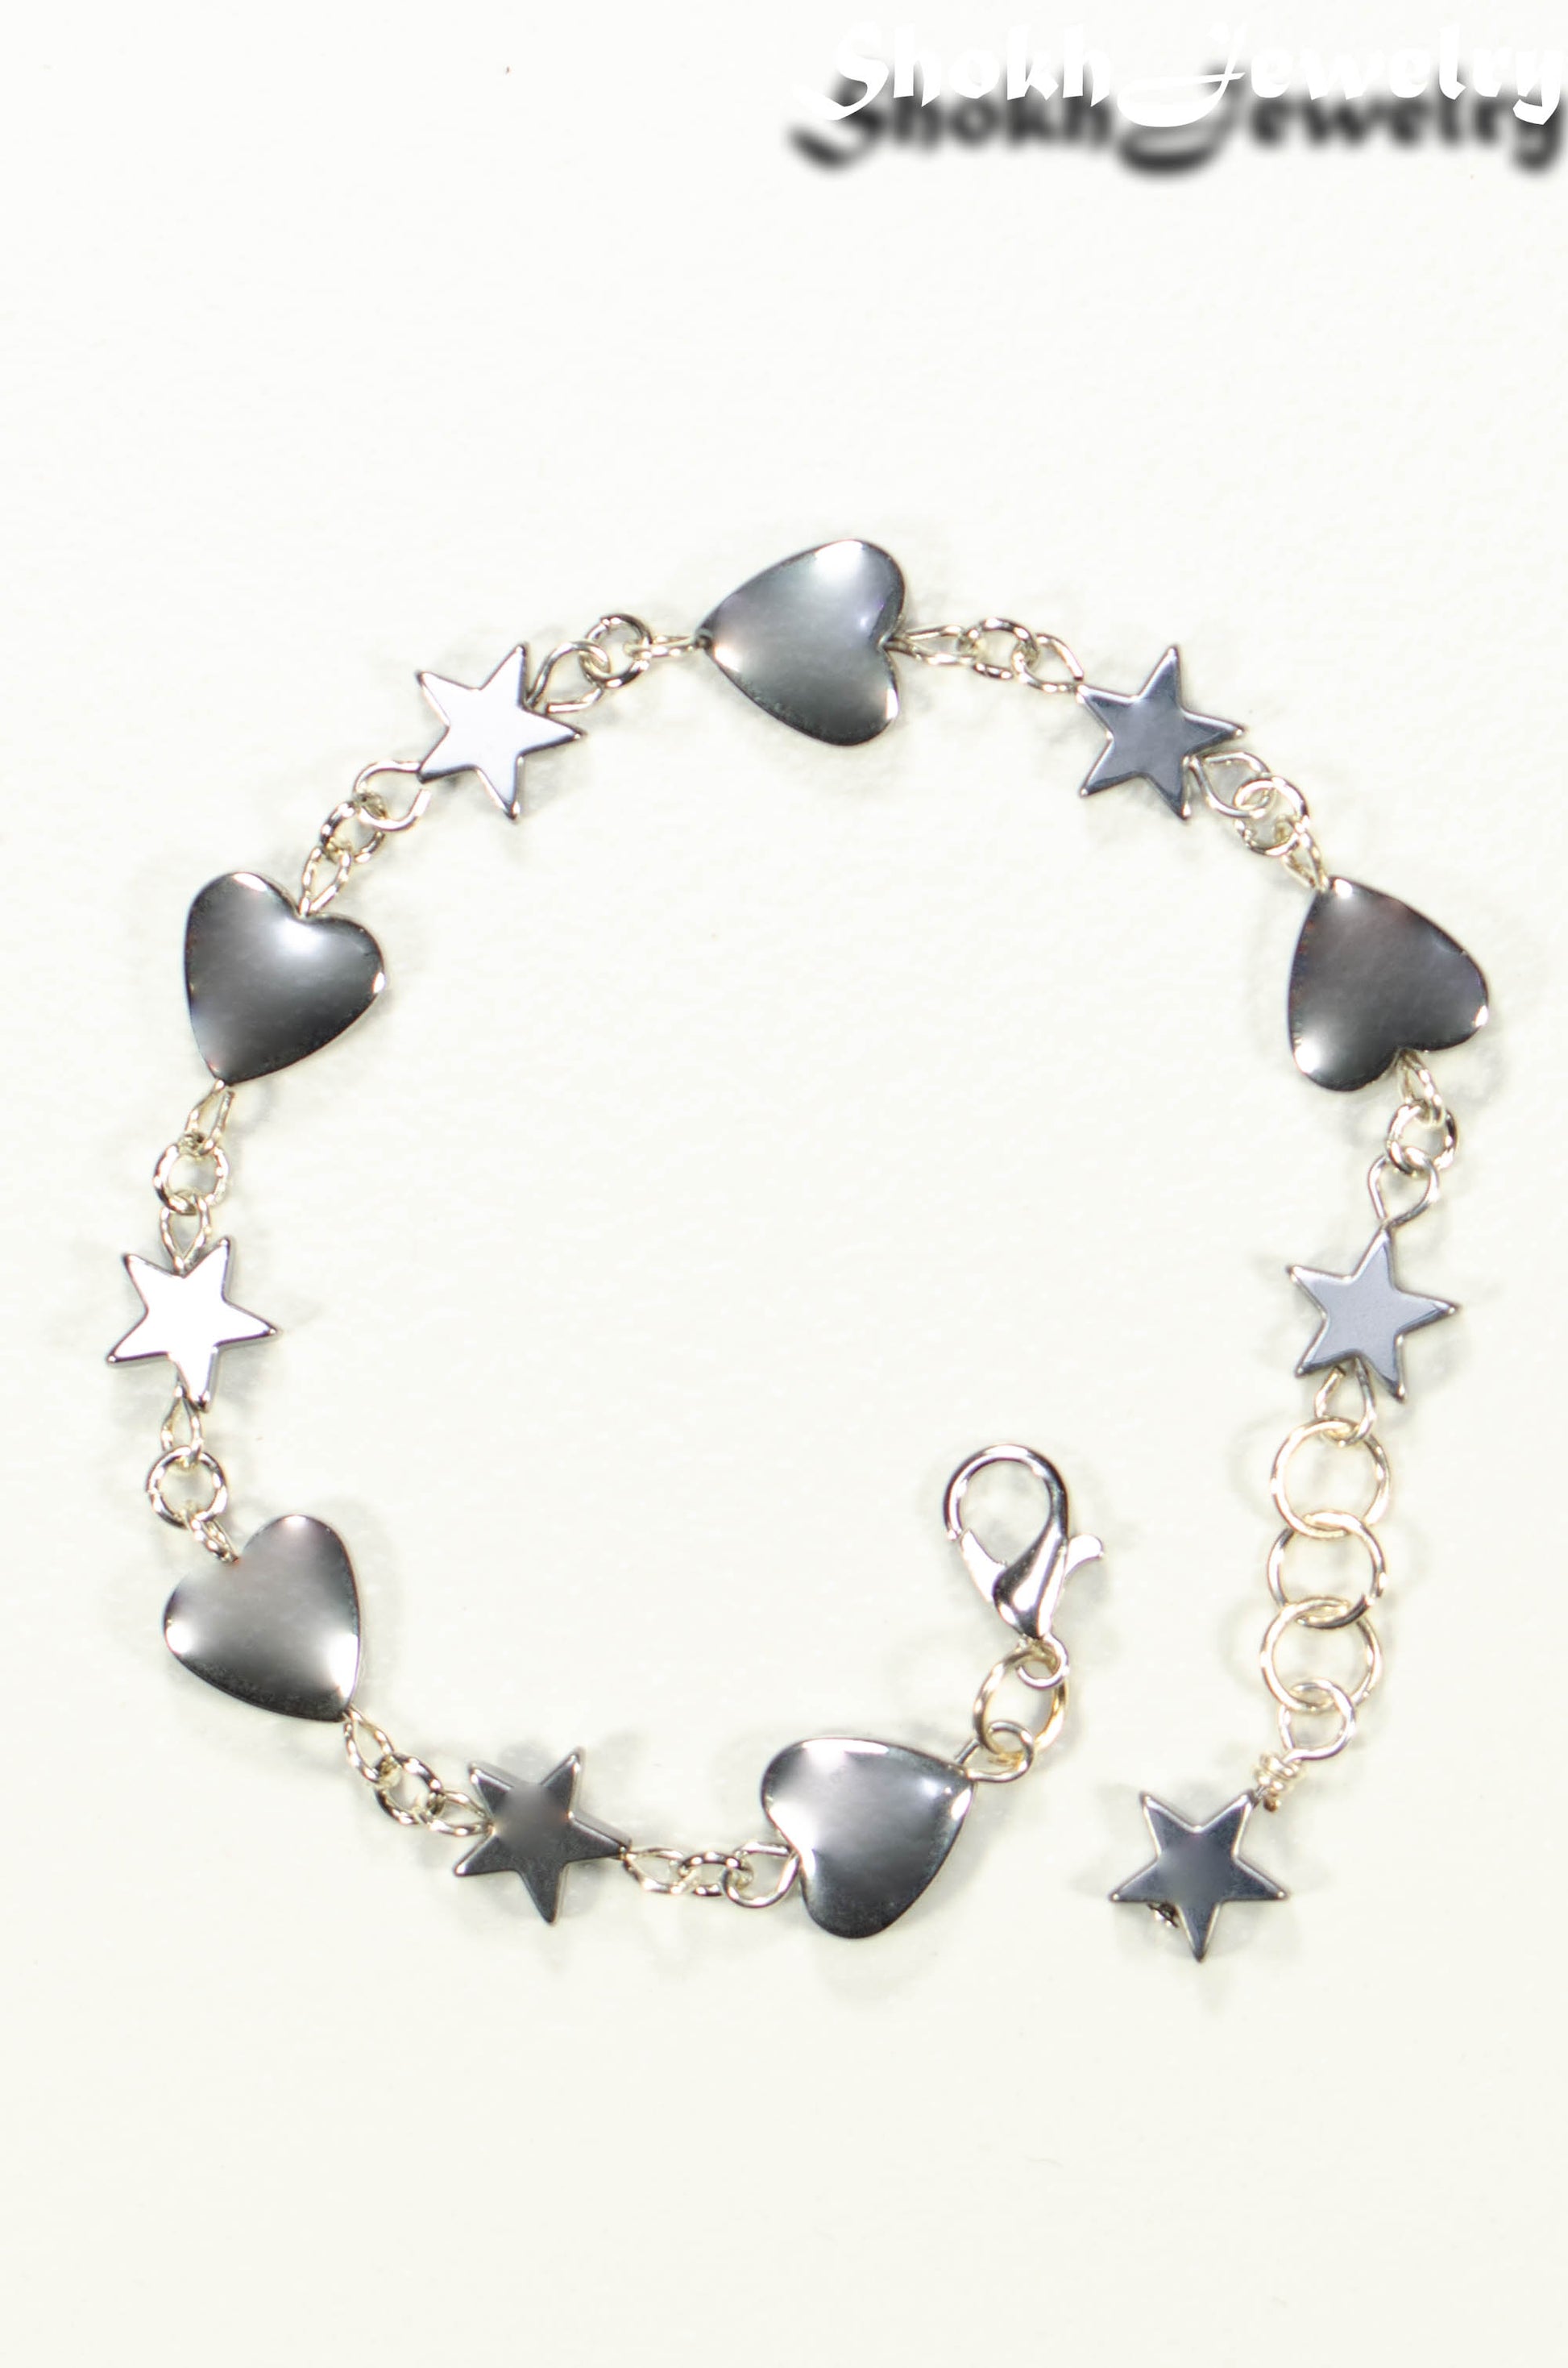 Top view of Handmade Hematite Heart and Star Link Bracelet.